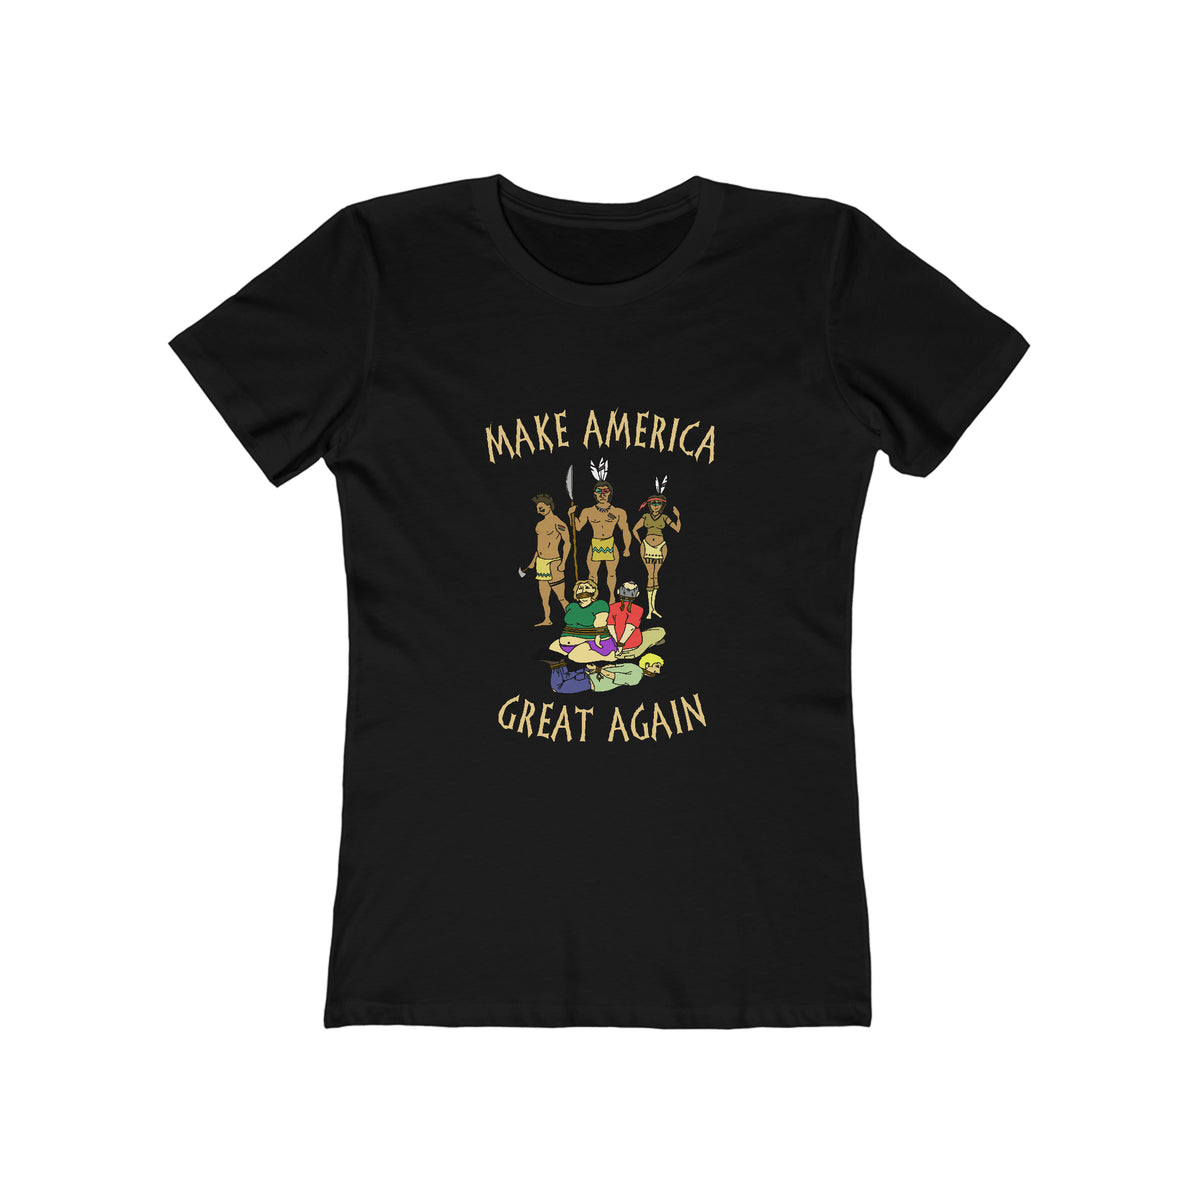 Make America Great Again (Native Americans) - Women’s T-Shirt